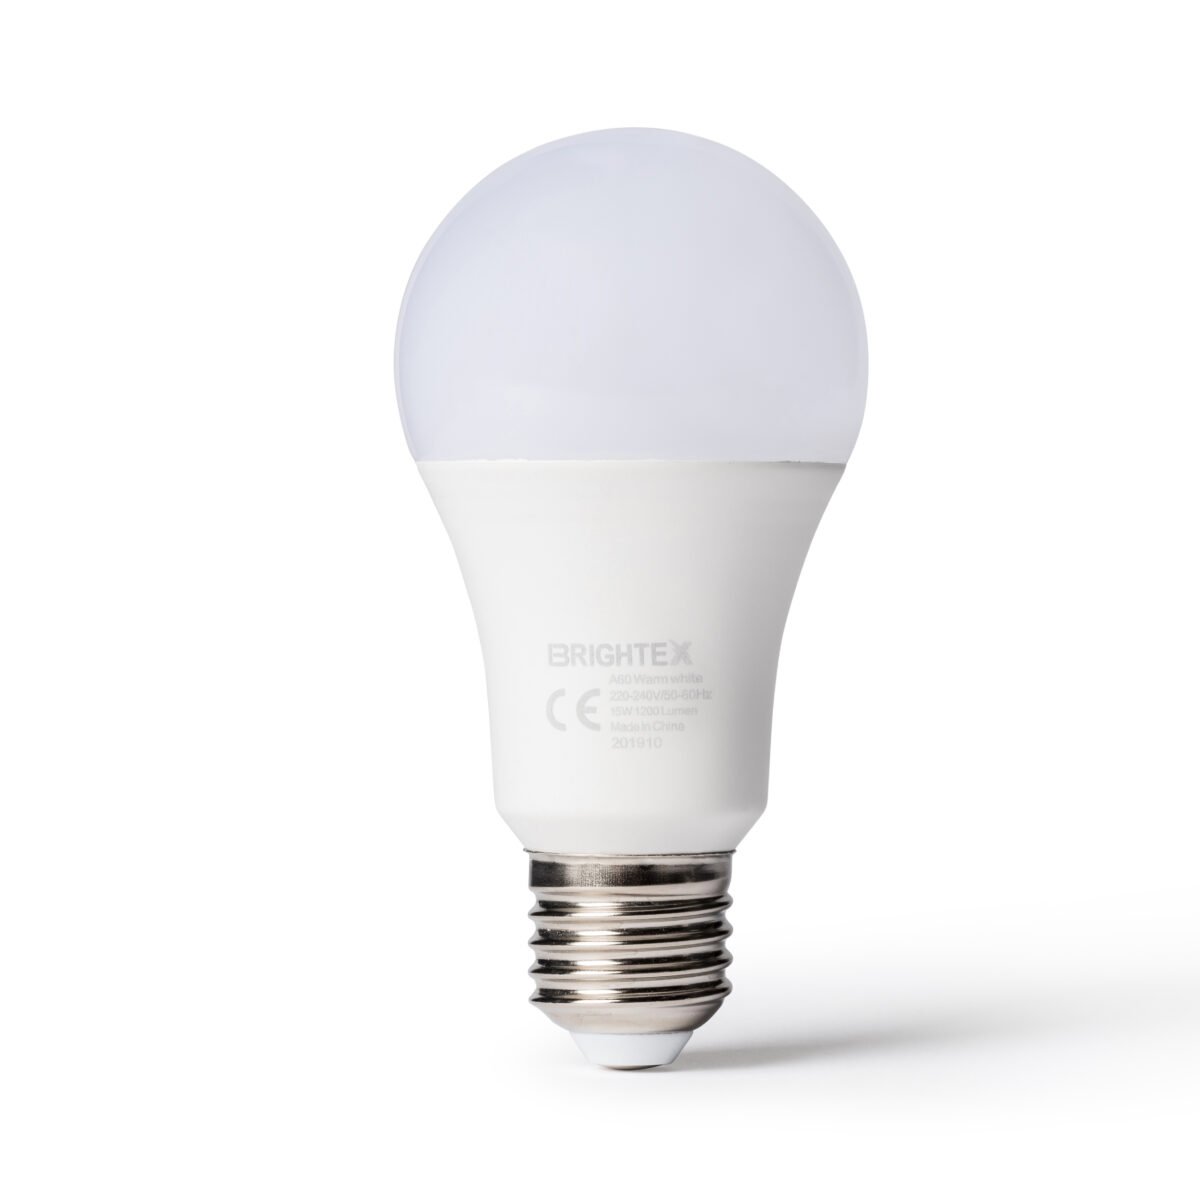 The smart light led bulb